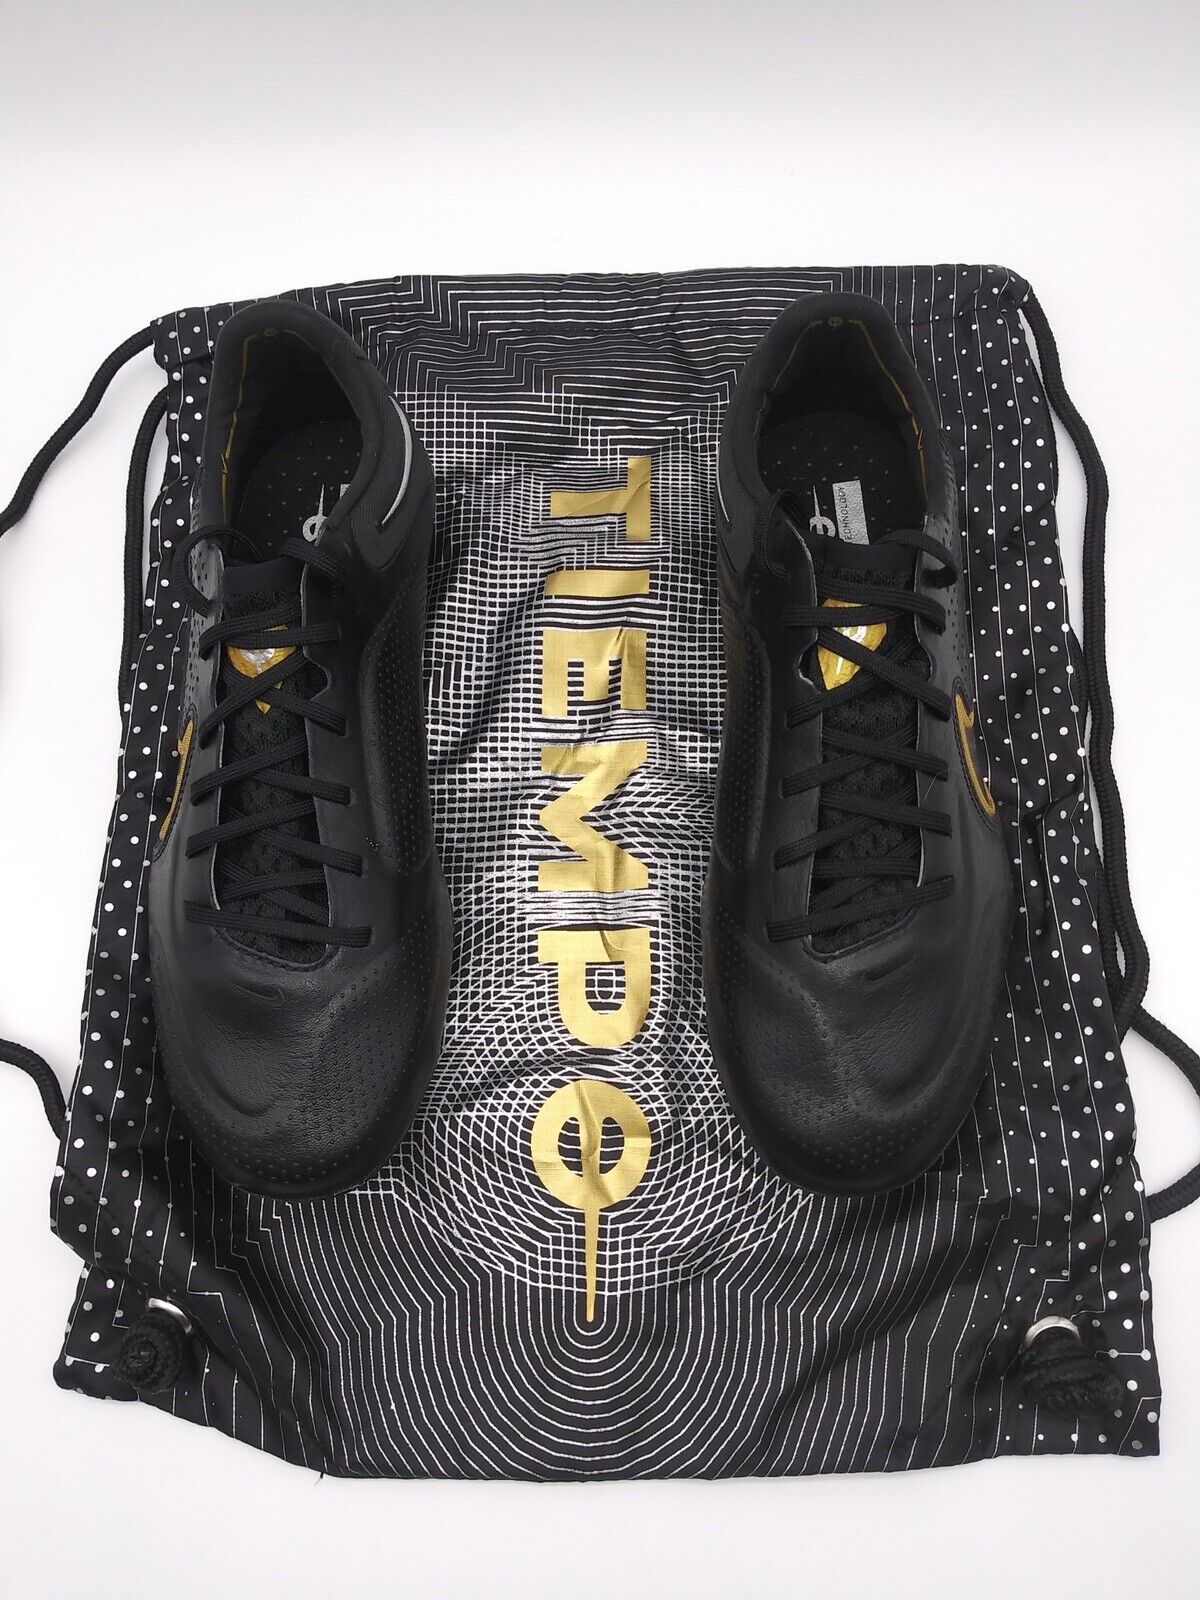 Nike Tiempo Legend 9 Elite FG Black Gold